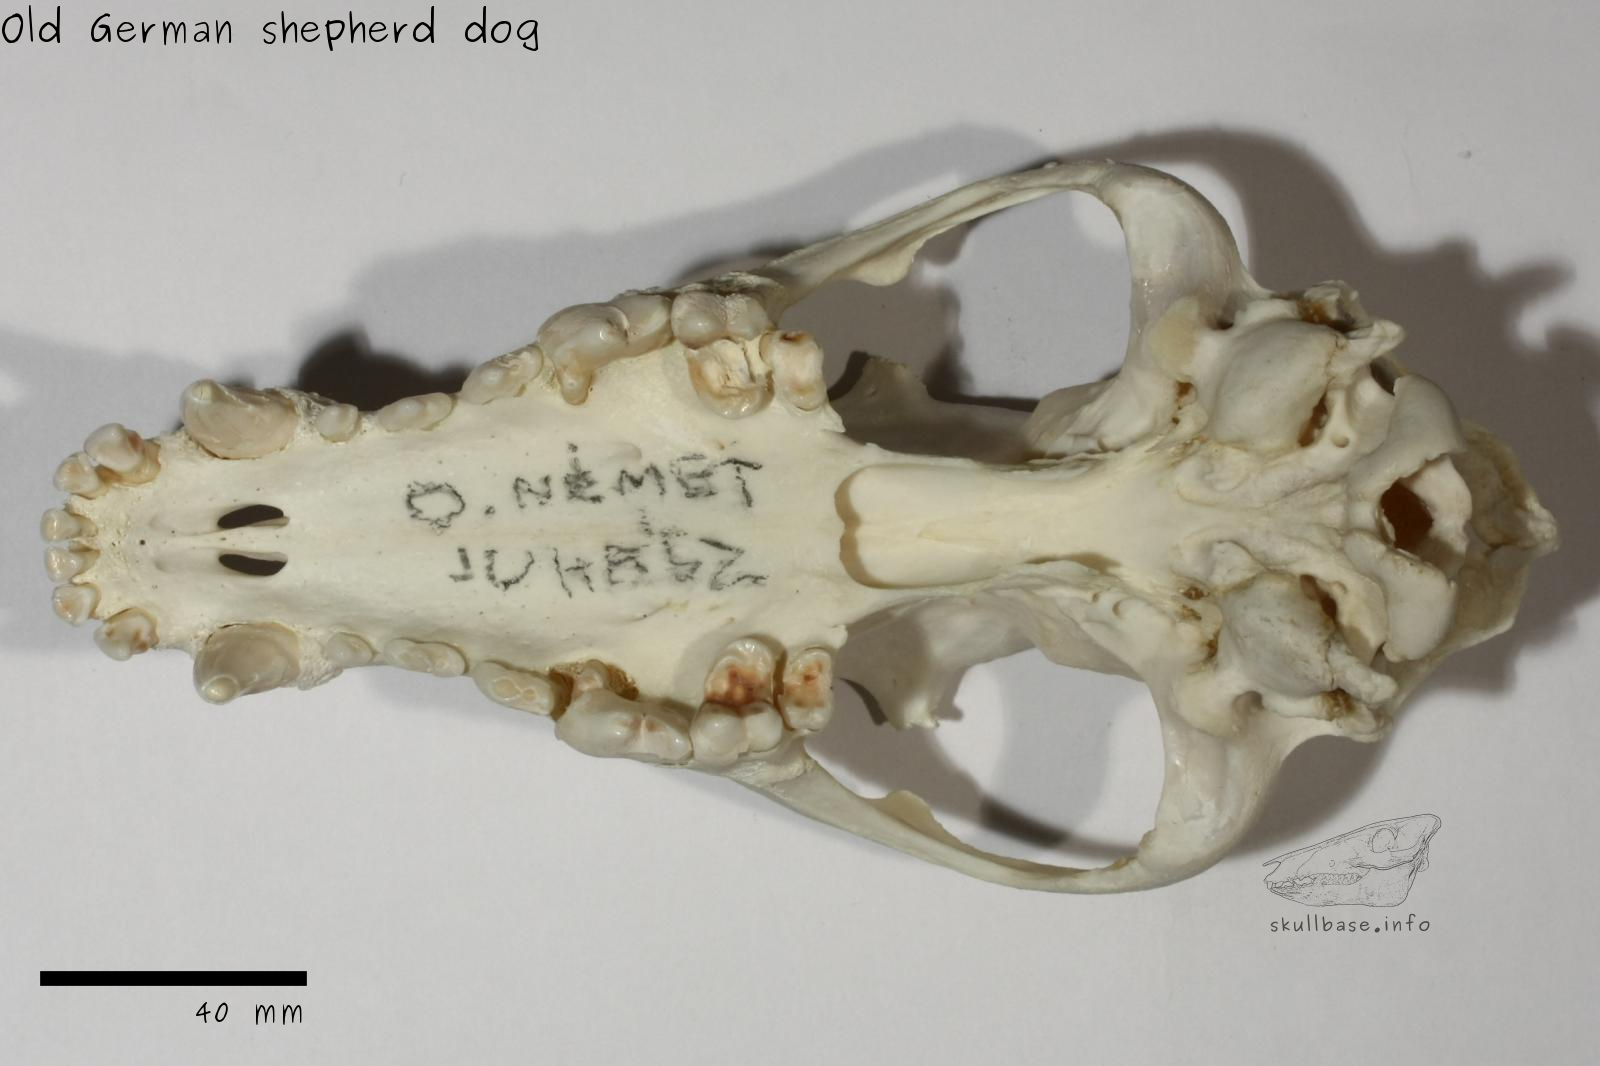 Old German shepherd dog (Canis lupus familiaris) skull ventral view